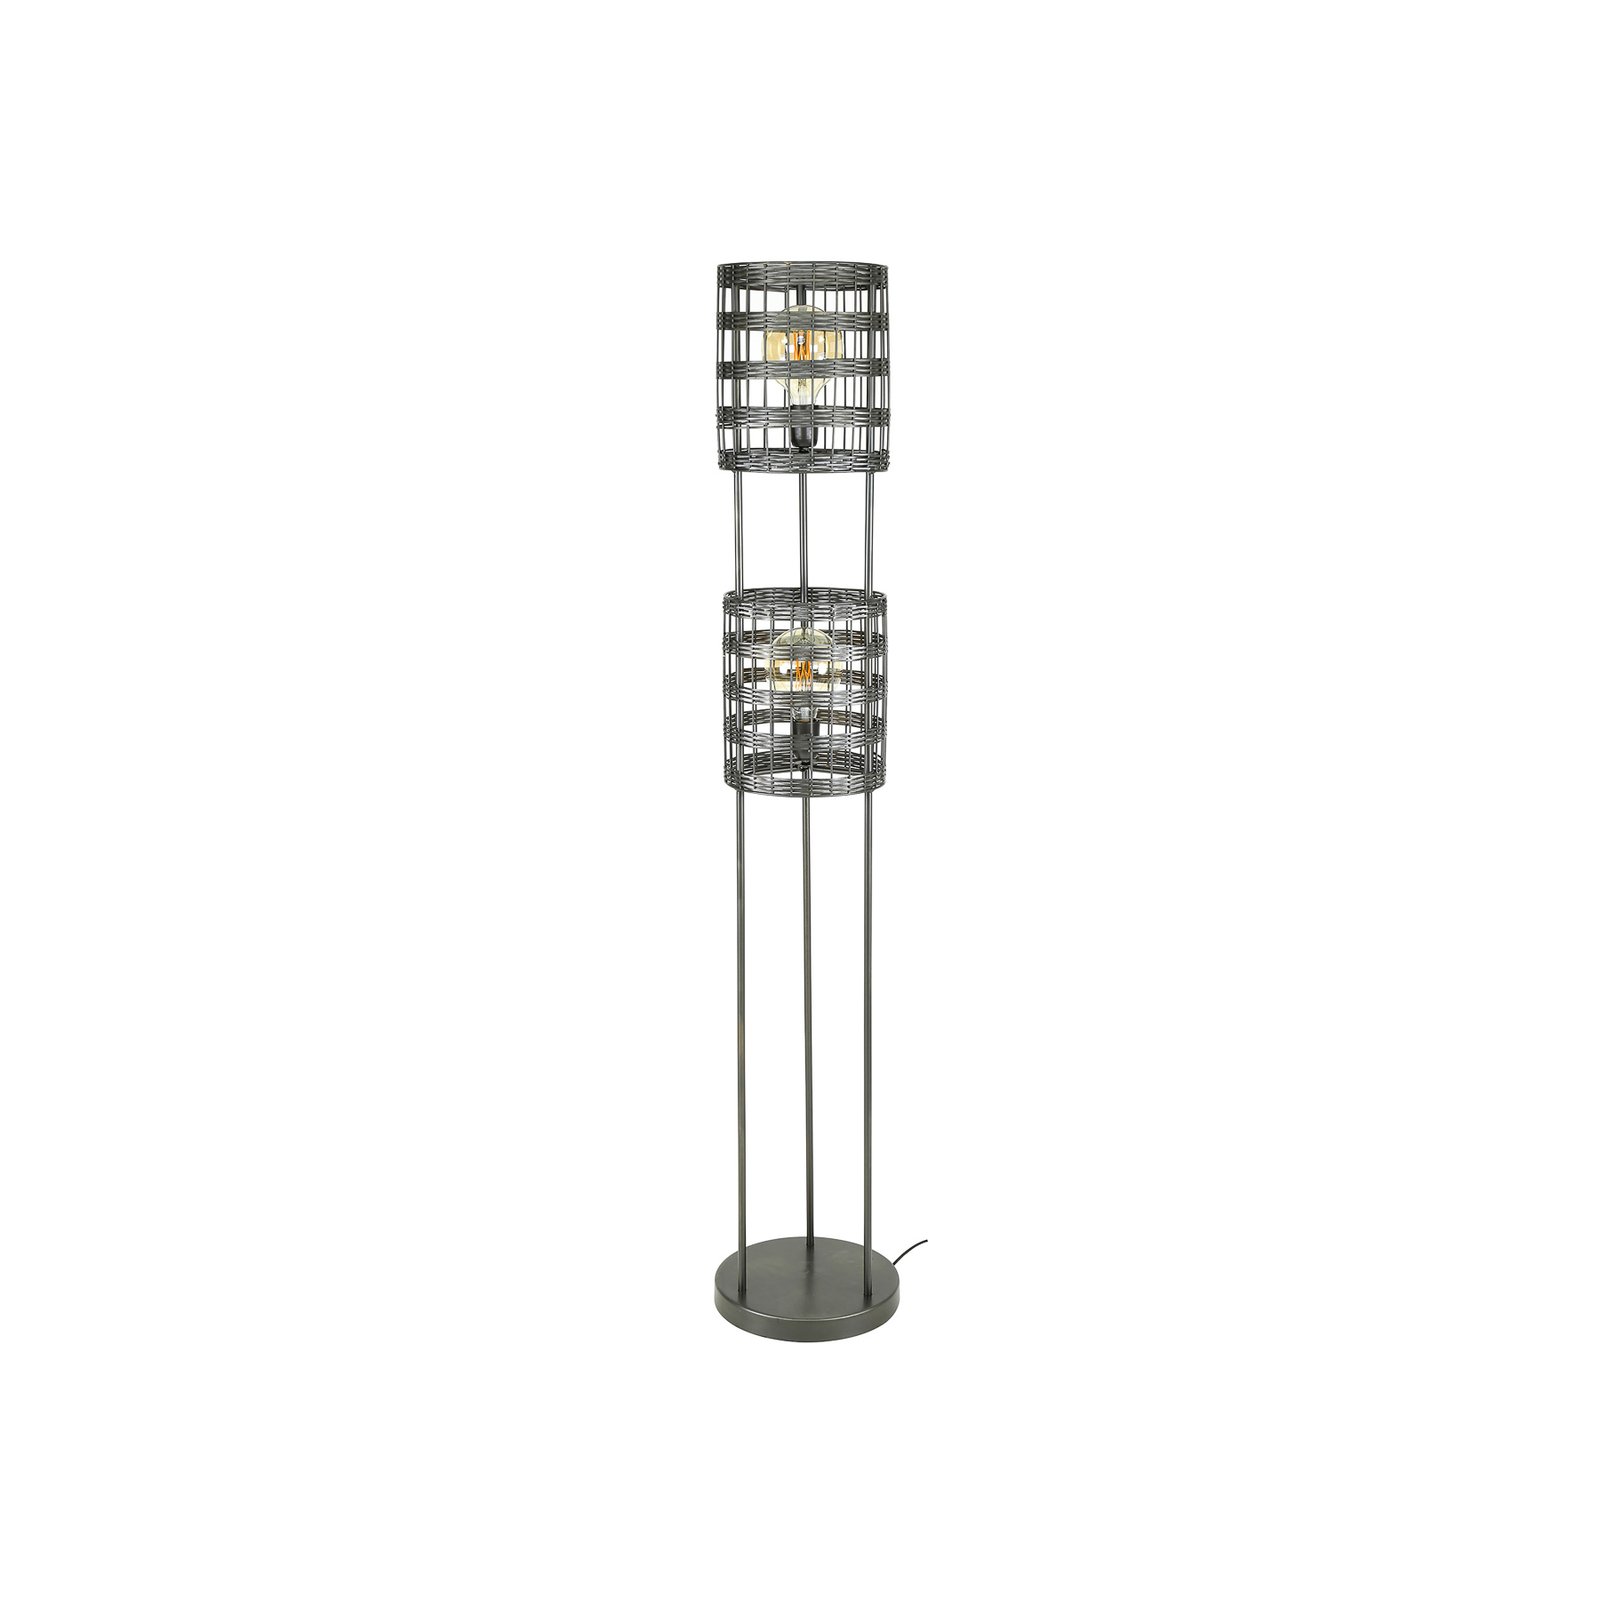 Lampe sur pied Graf-Fiesko noire-nickel à 2 lampes